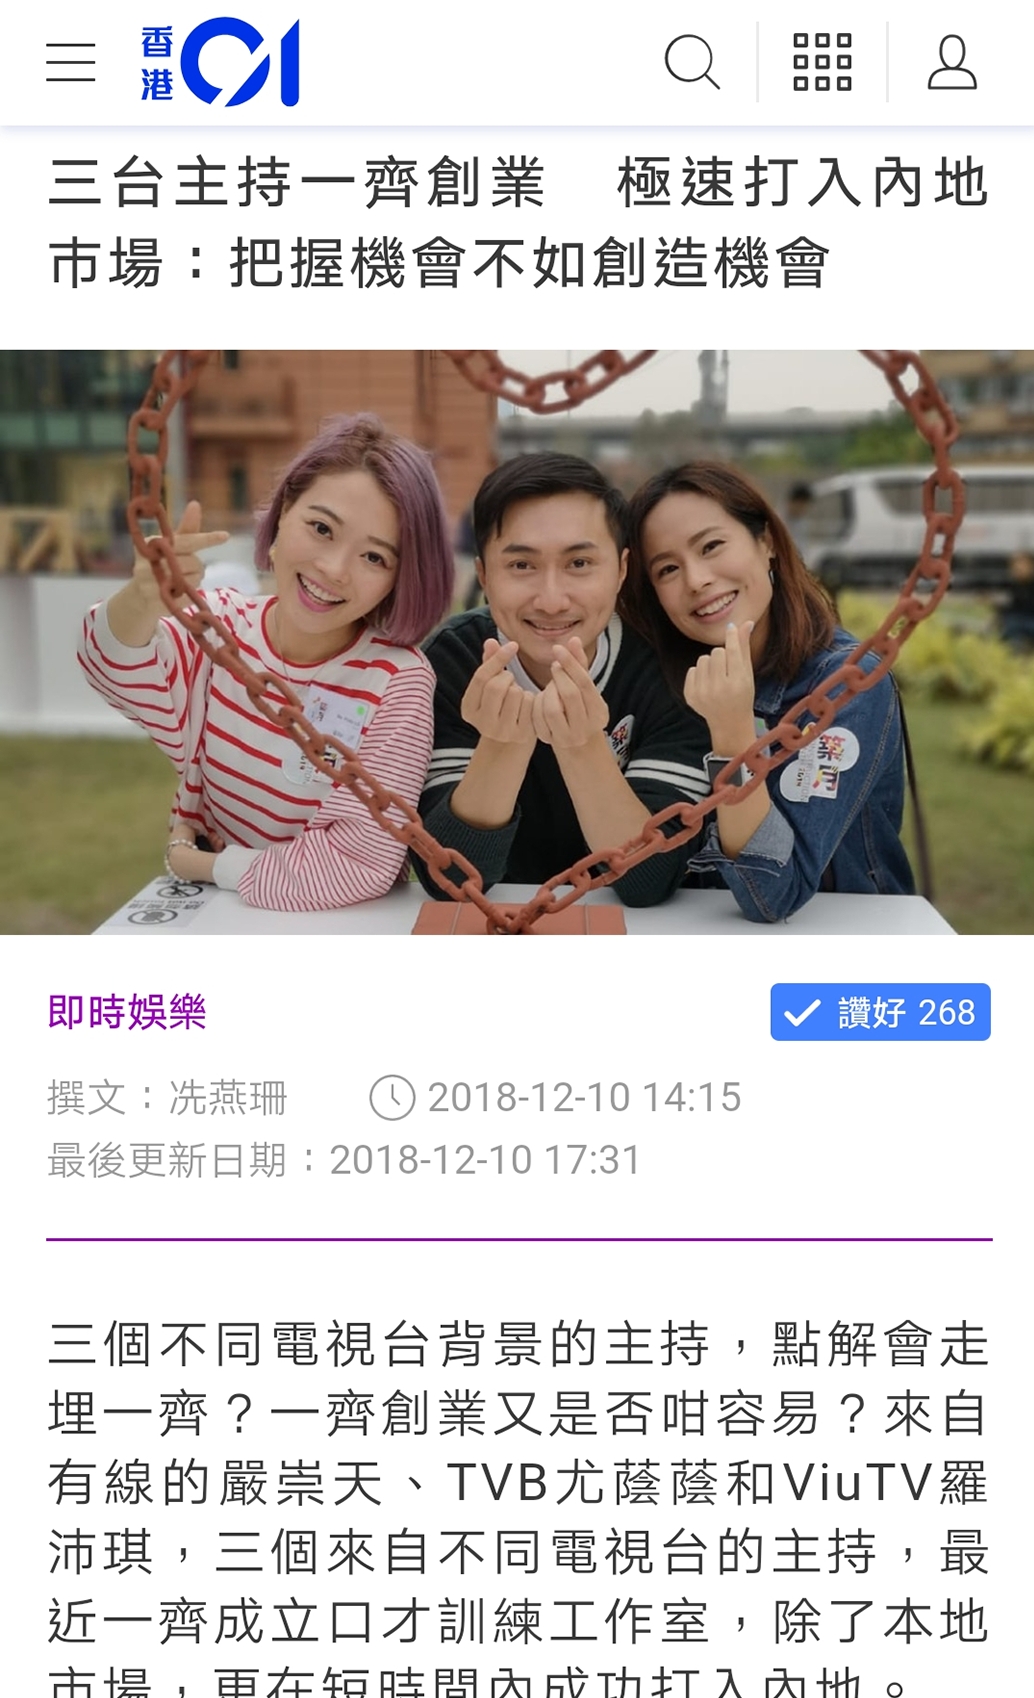 Pinky Lo 羅沛琪 司儀傳媒報導: Viu TV 主持攜手與TVB 及有線主持一起開司儀培訓工作室